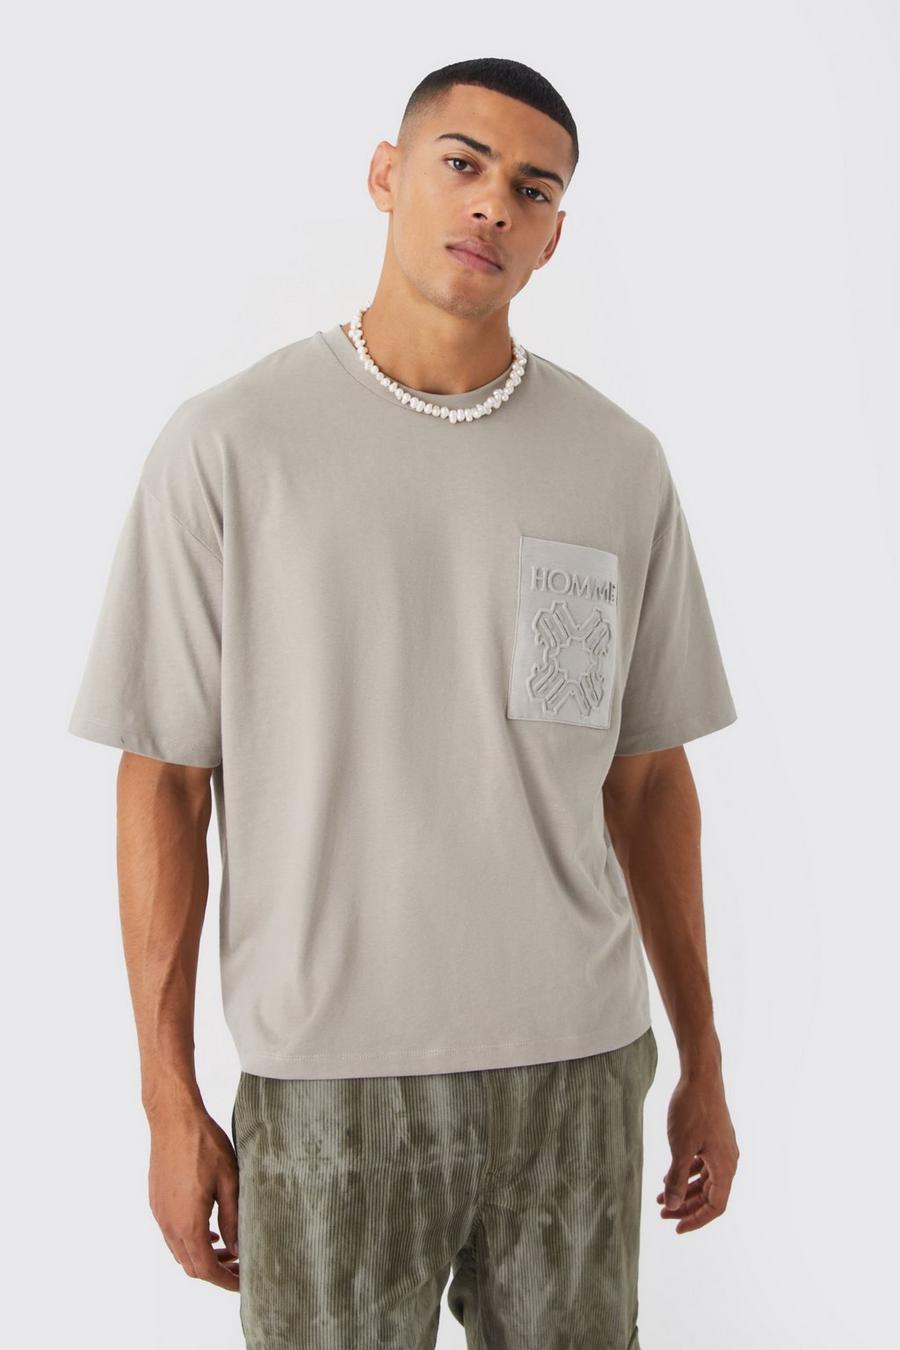 Kastiges Homme T-Shirt mit PU-Tasche, Charcoal